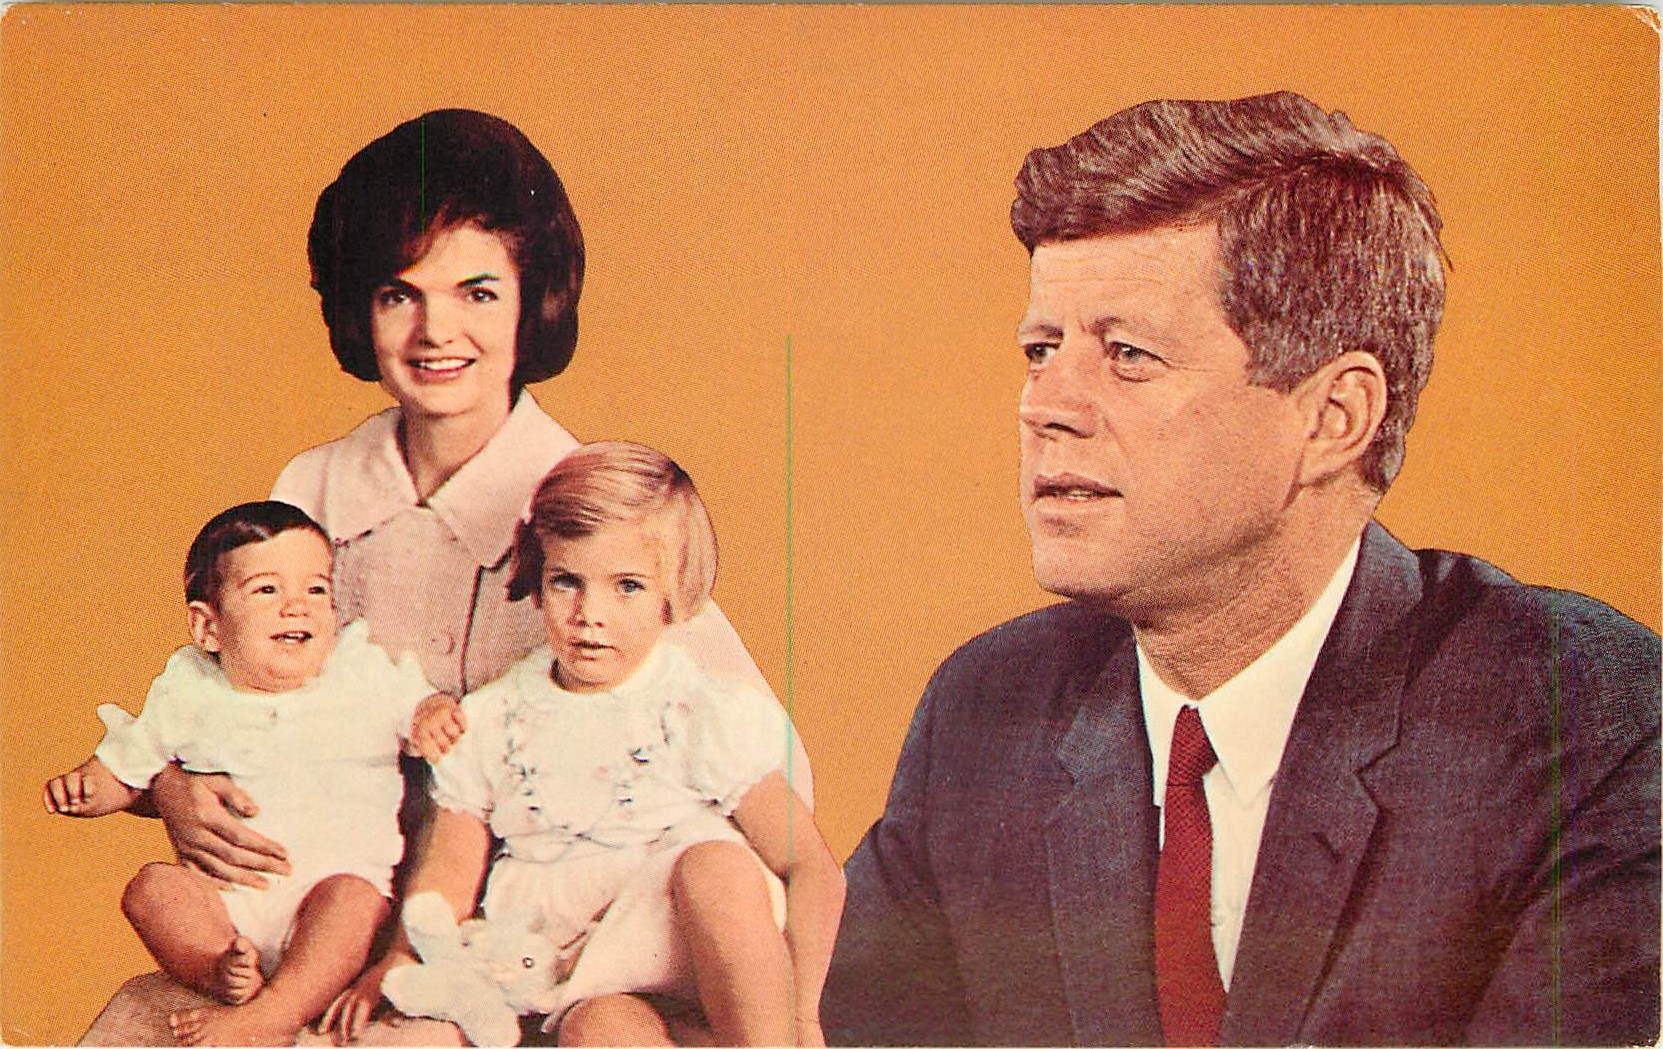 "President John F. Kennedy and Family"